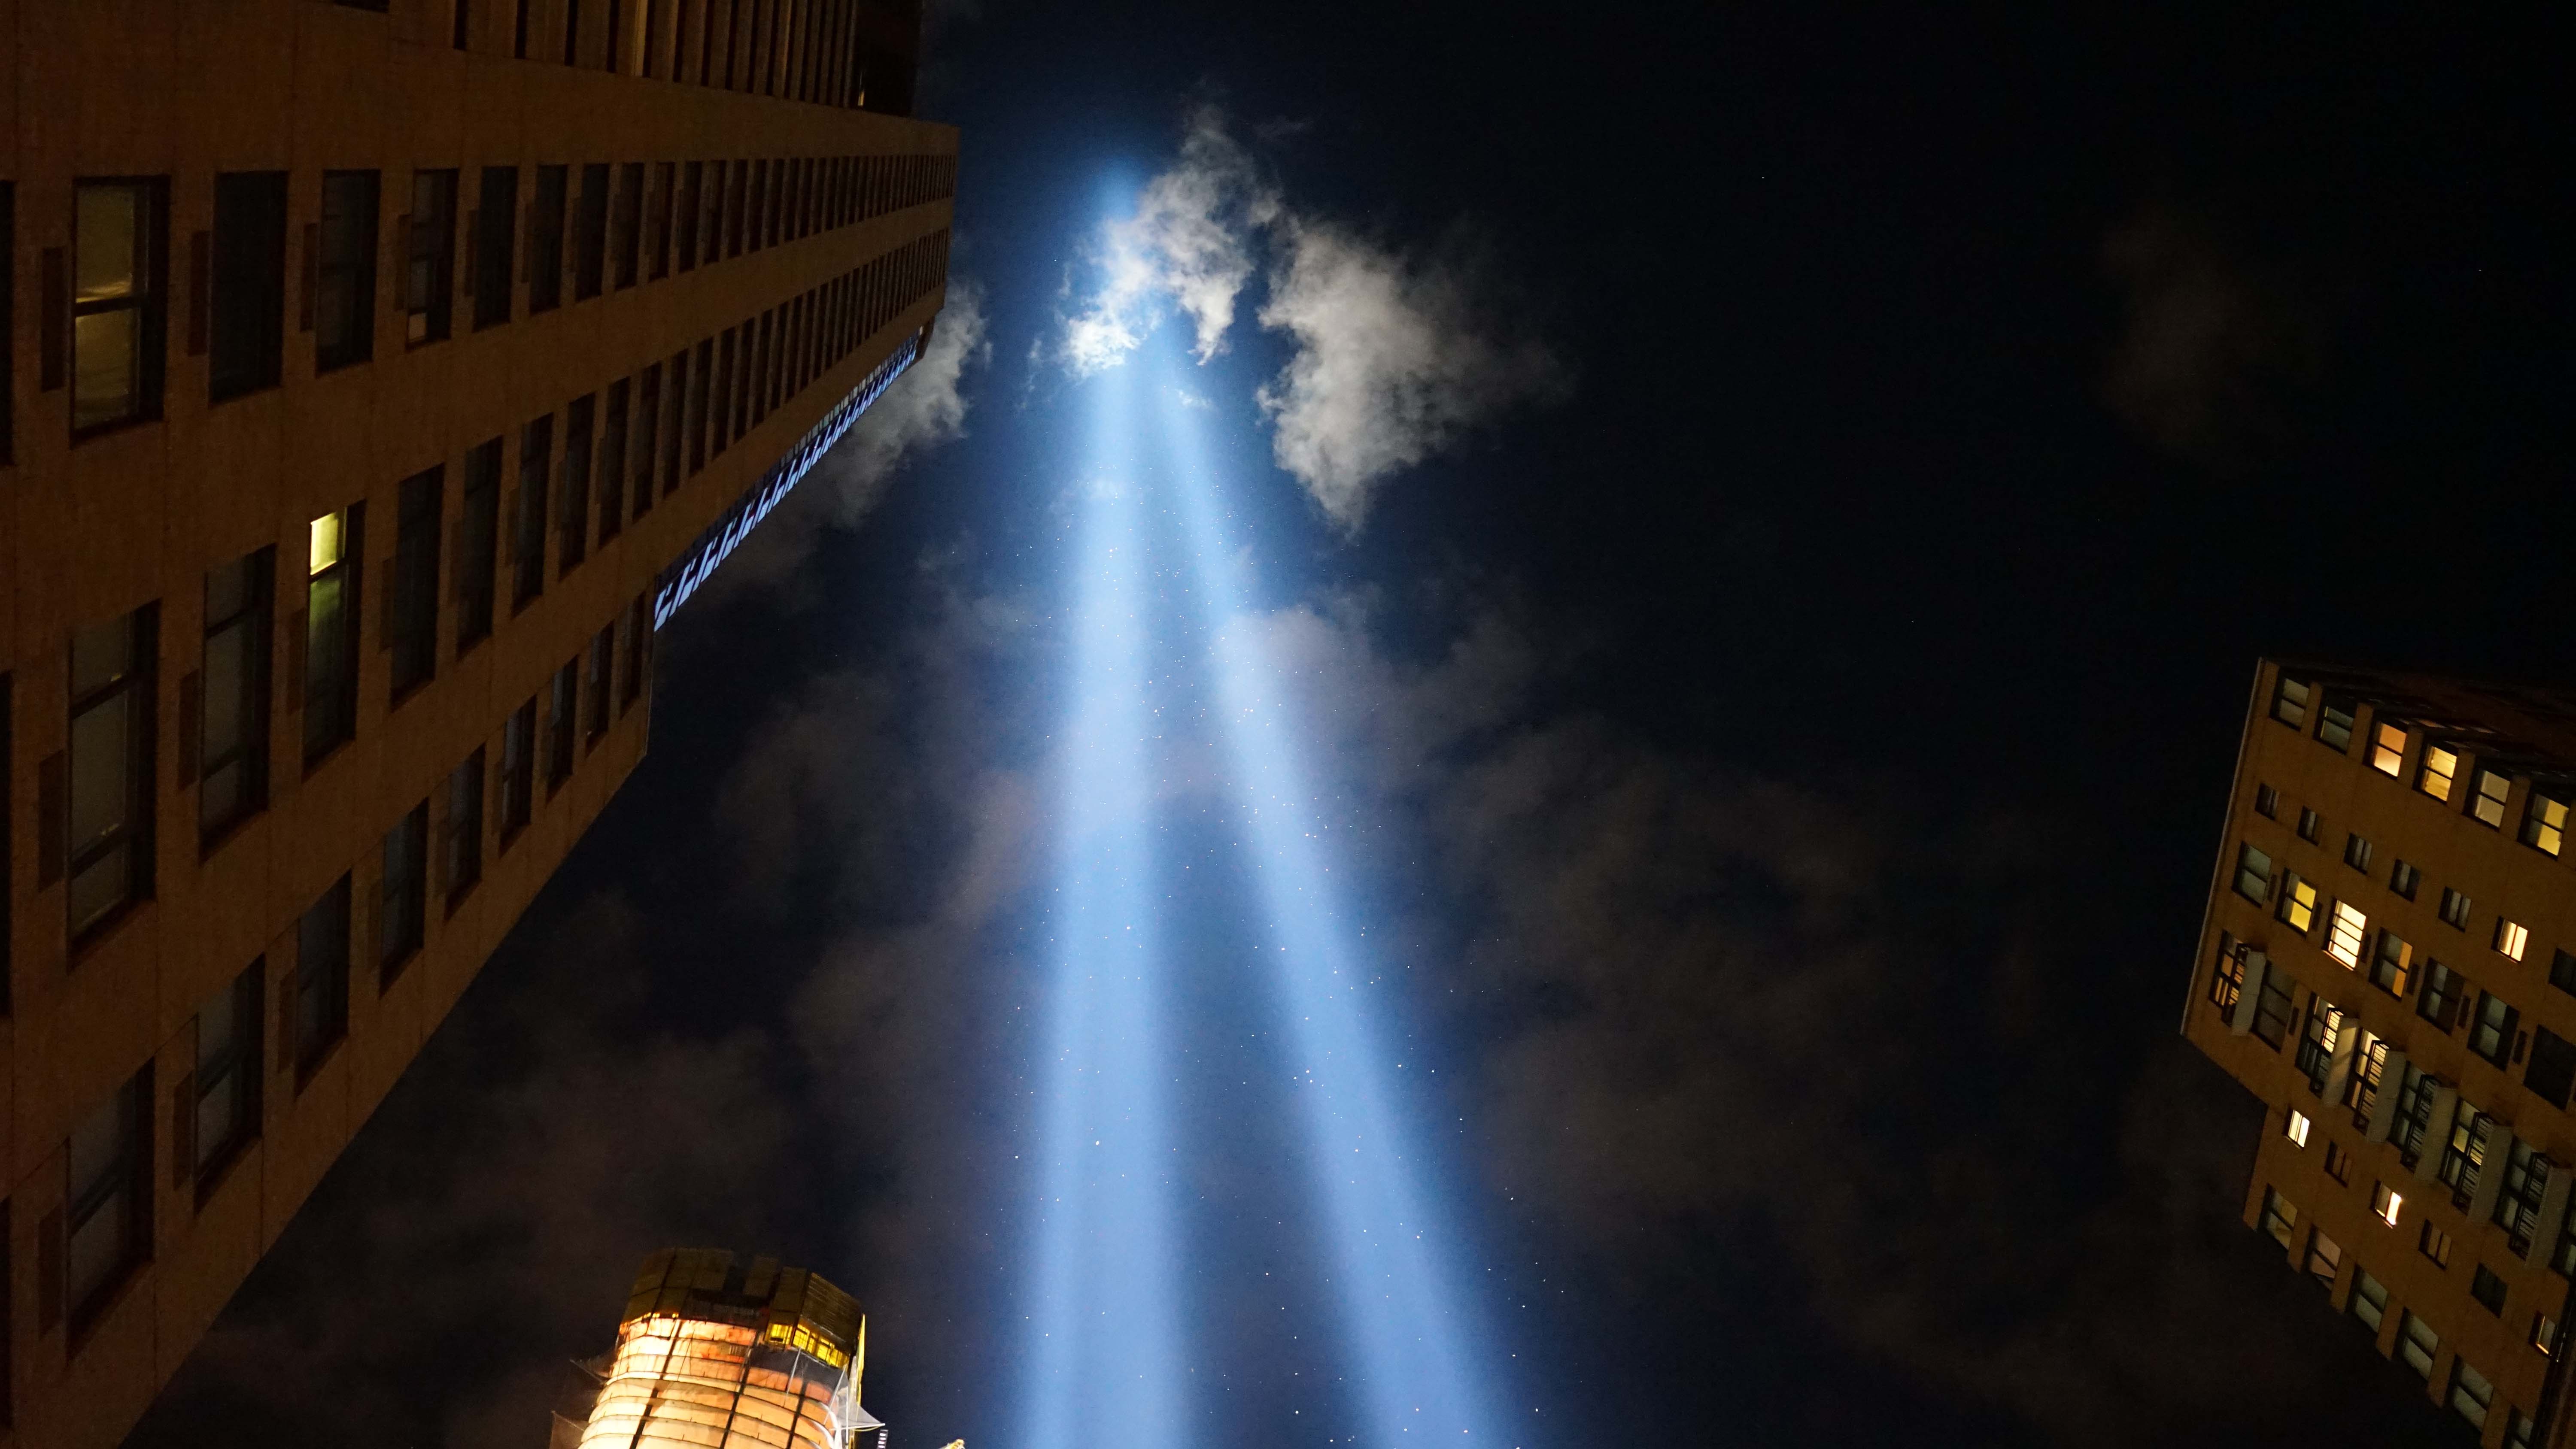 911 spot lights looking straight up 2015